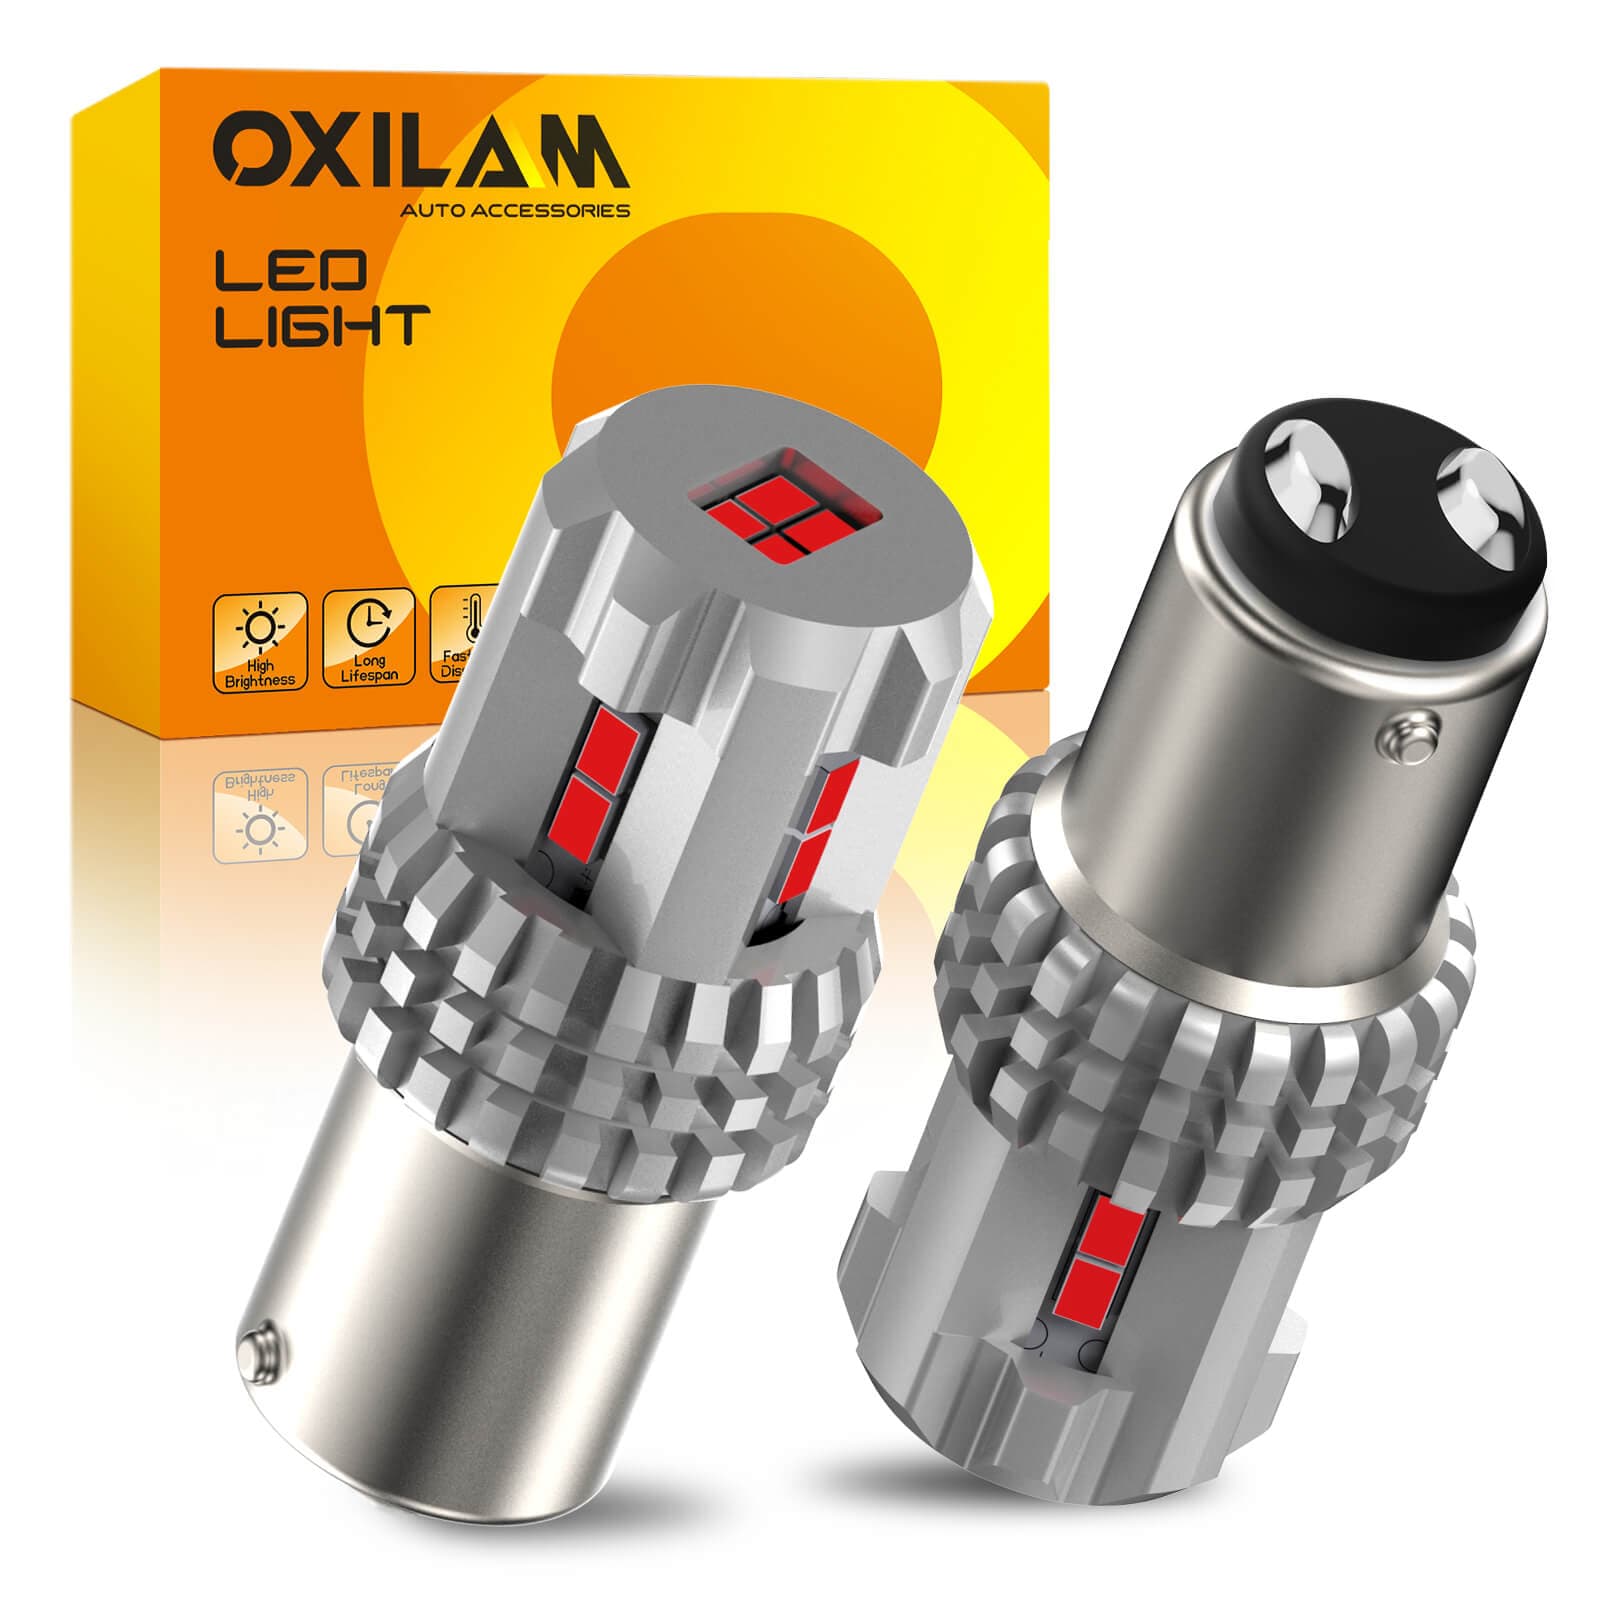 Oxilam Motor Vehicle Lighting OXILAM 1157 LED Bulbs Brake Lights 3000 Lumens Extremely Bright 2057 7528 7507 BAY15D 1157 LED Bulbs for Tail Lights Brake Lights Brilliant Red, 2PCS